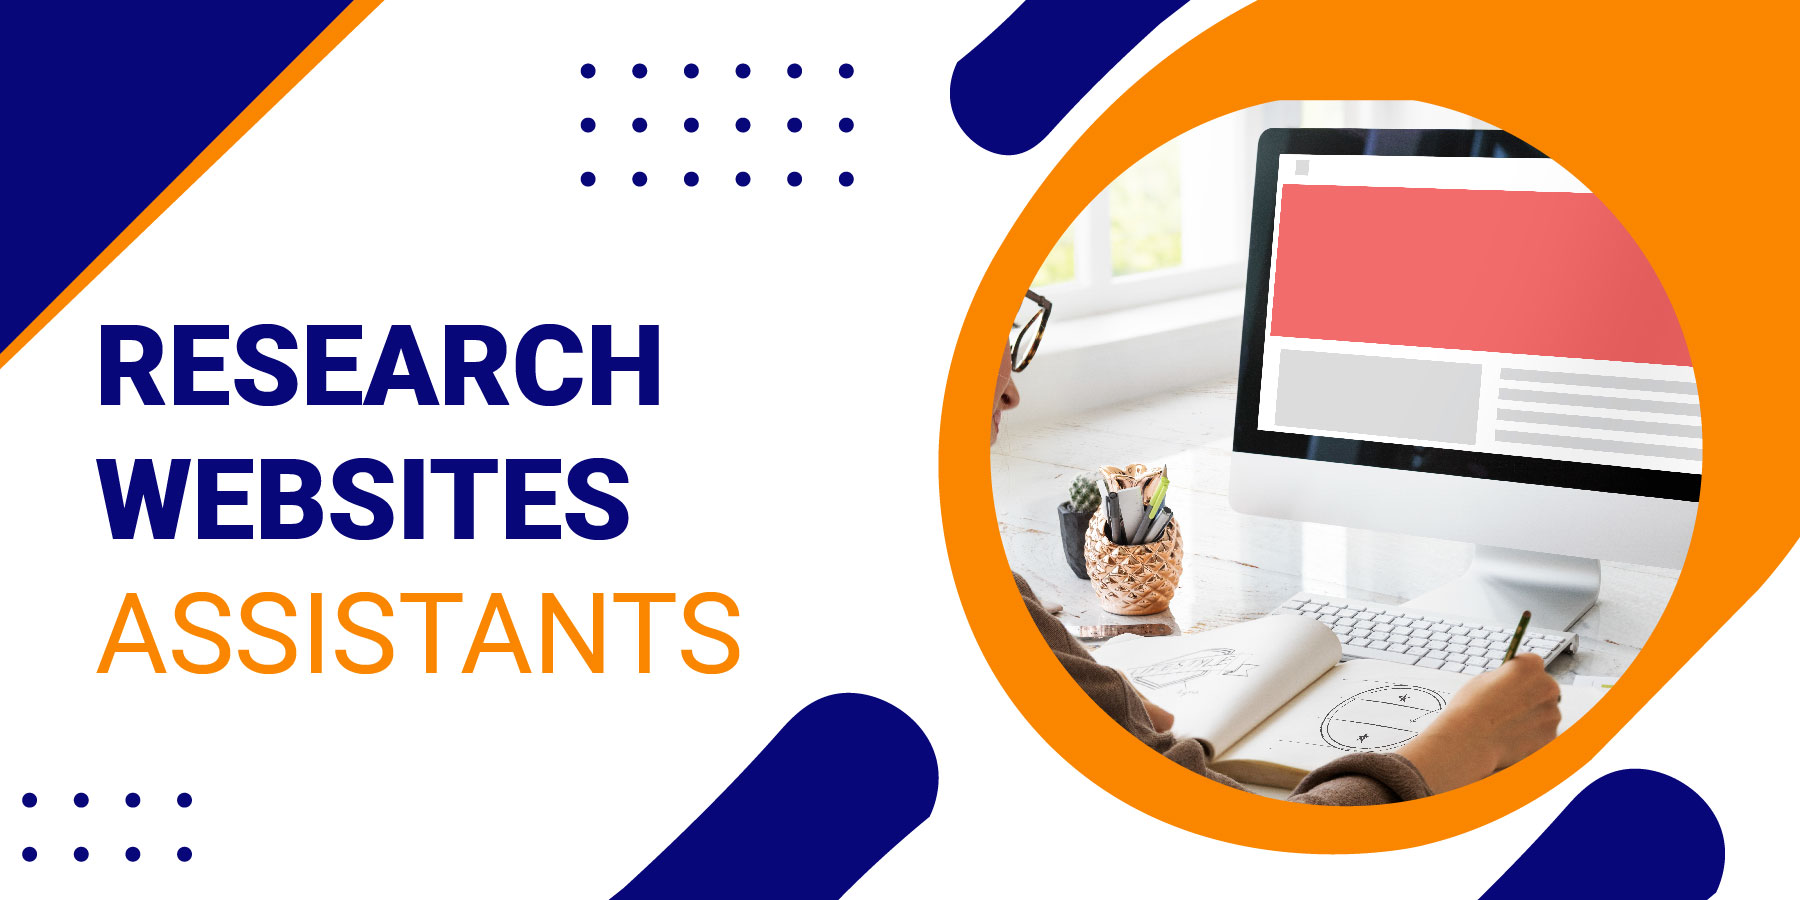 Research Websites Assistants